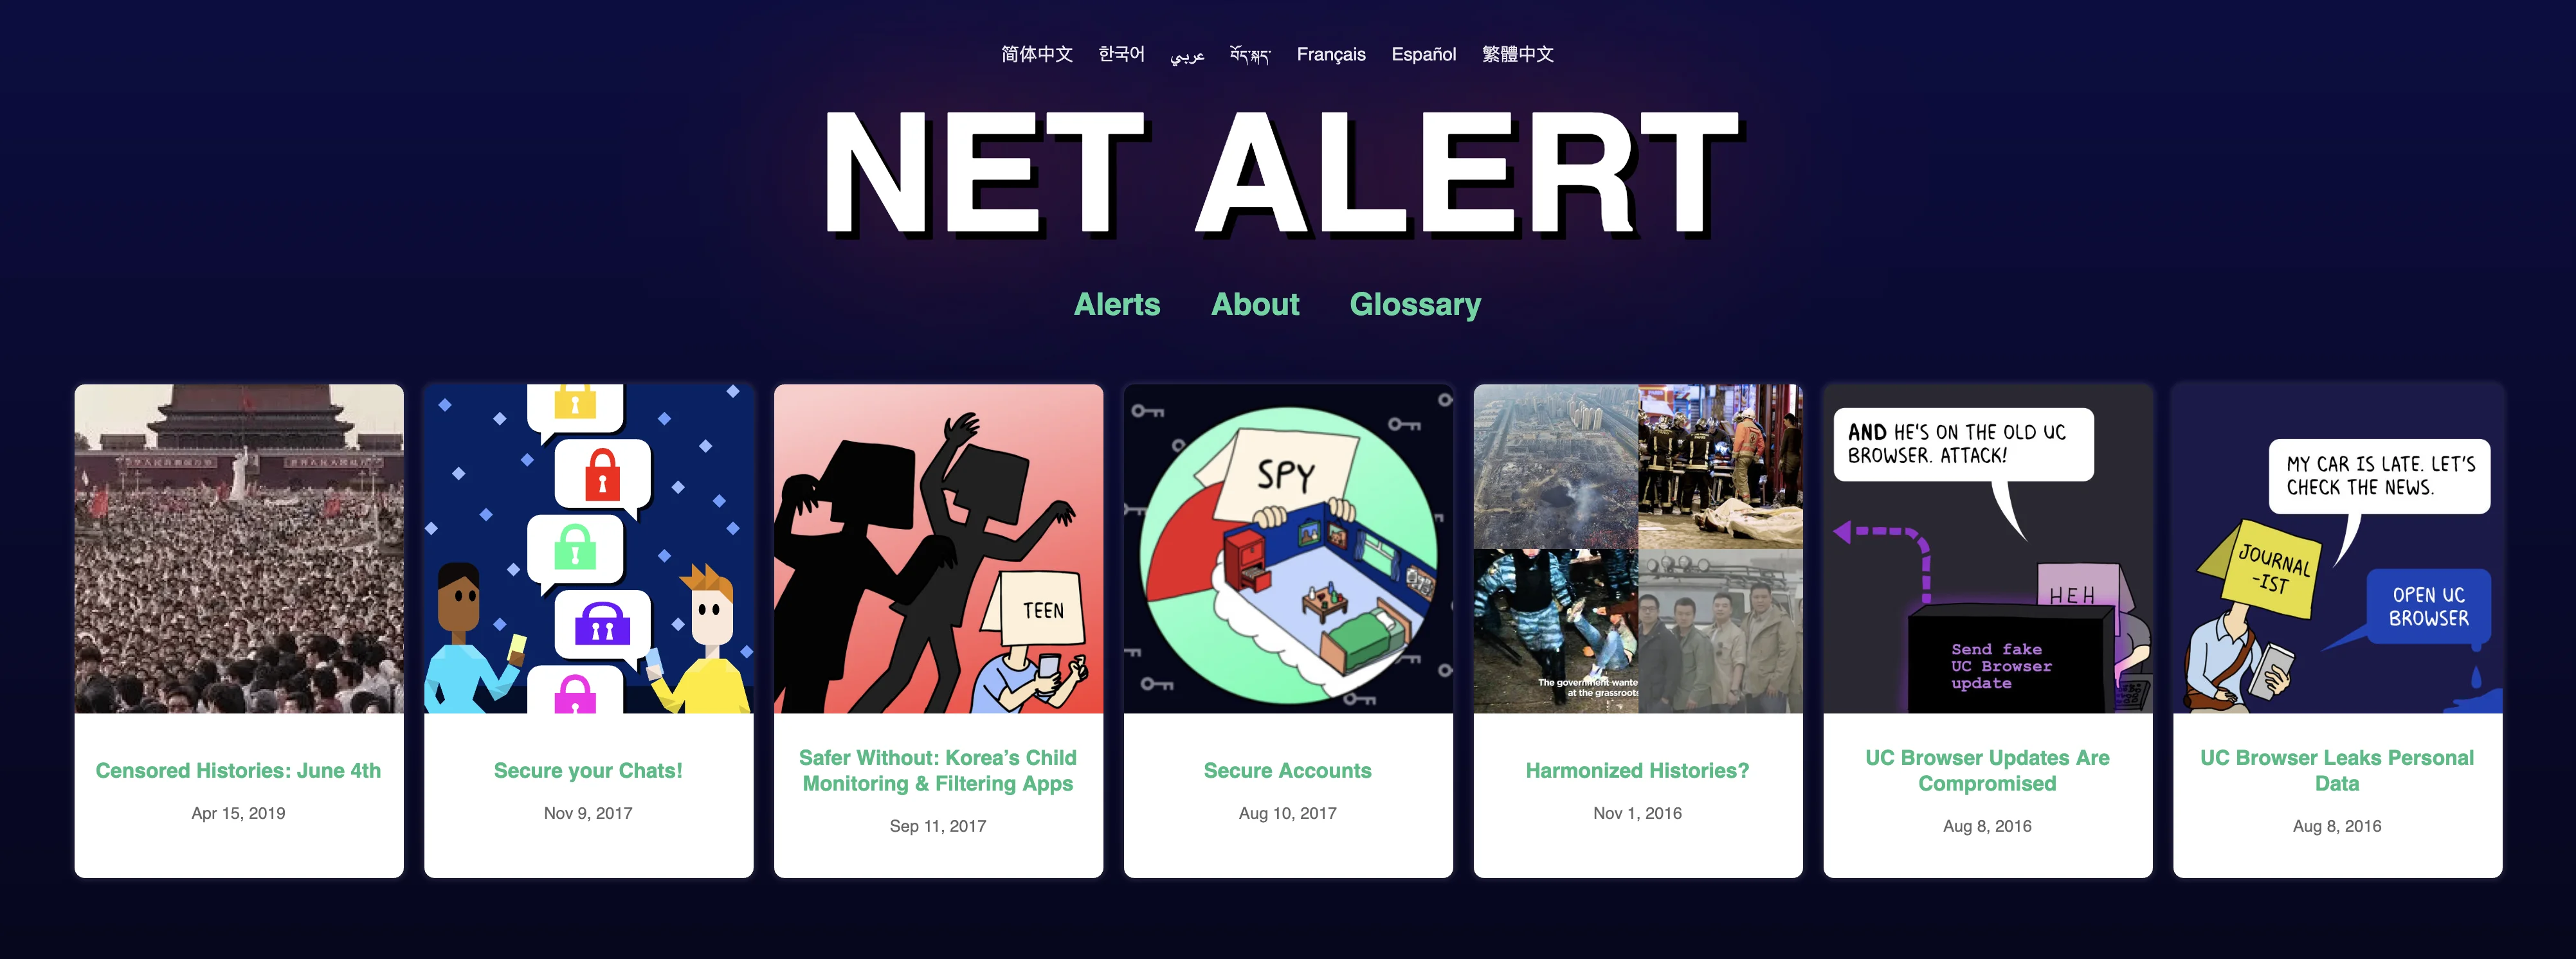 front page of Net Alert website